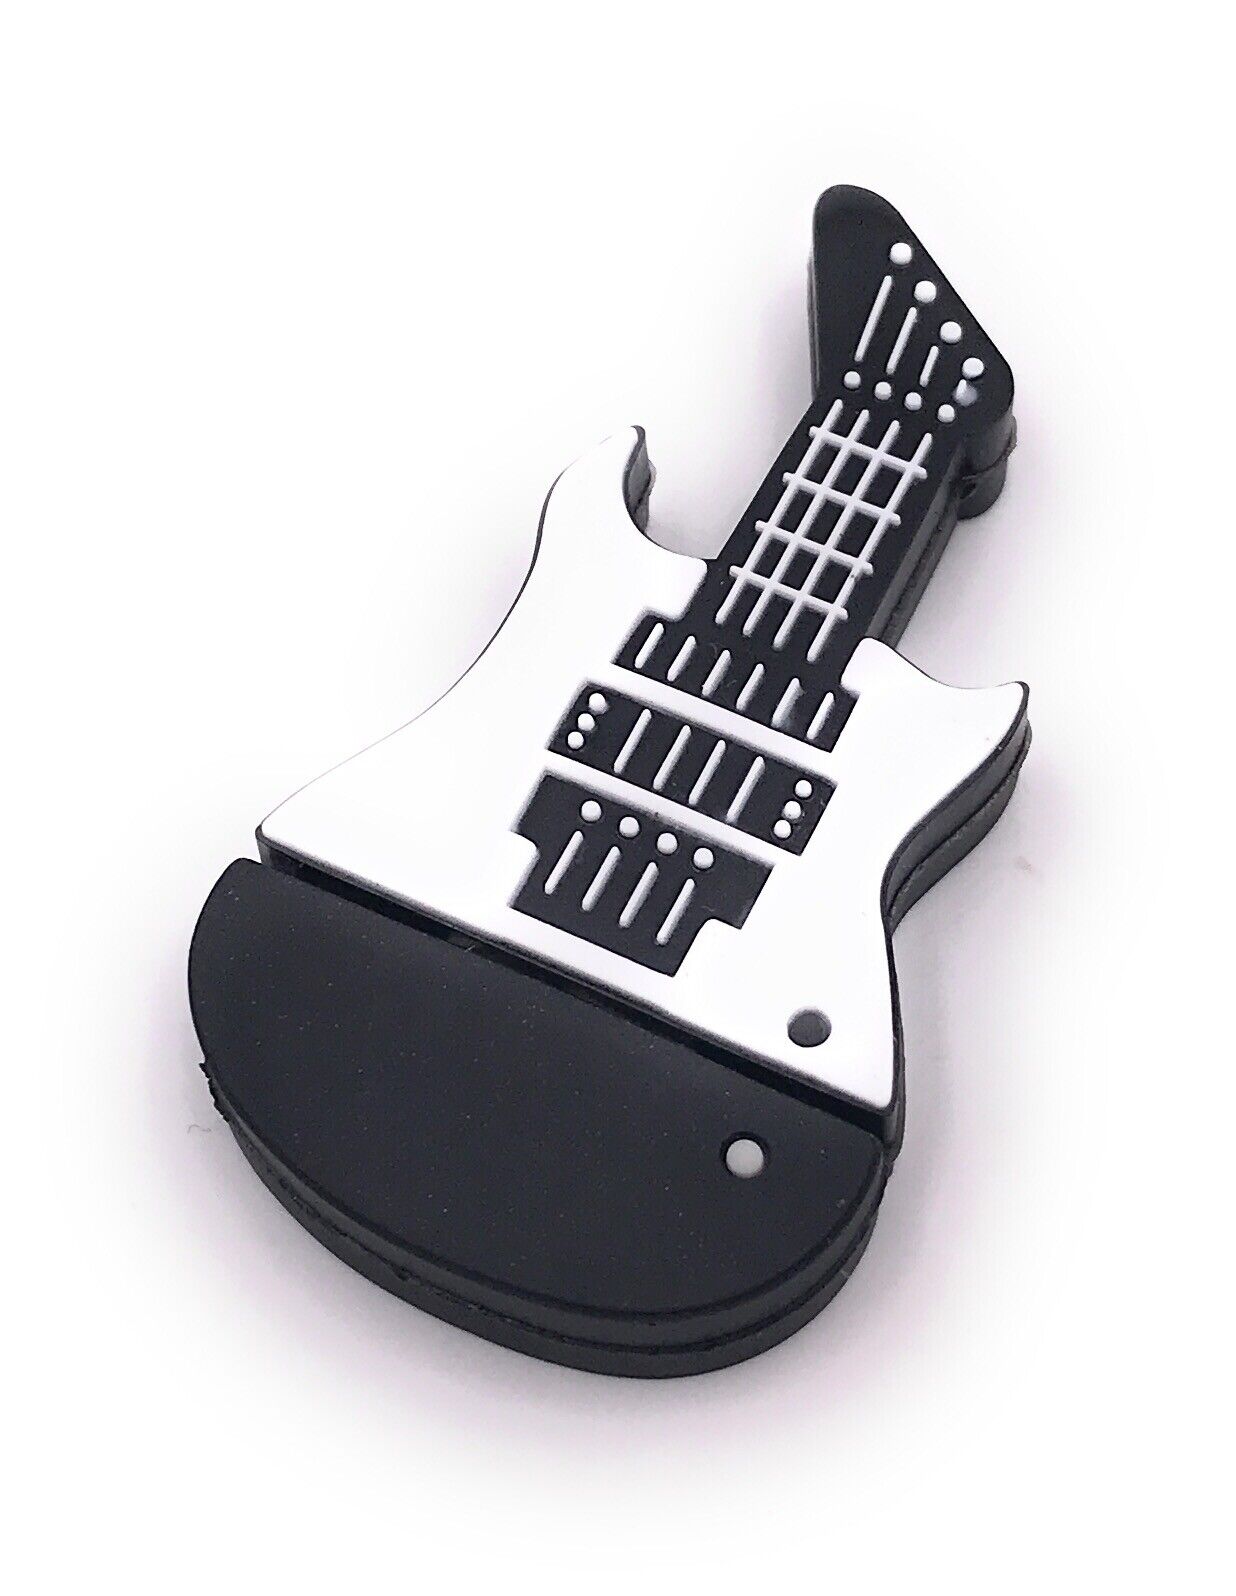 Guitar Musical Instrument Electric Guitar Black White Funny USB Stick